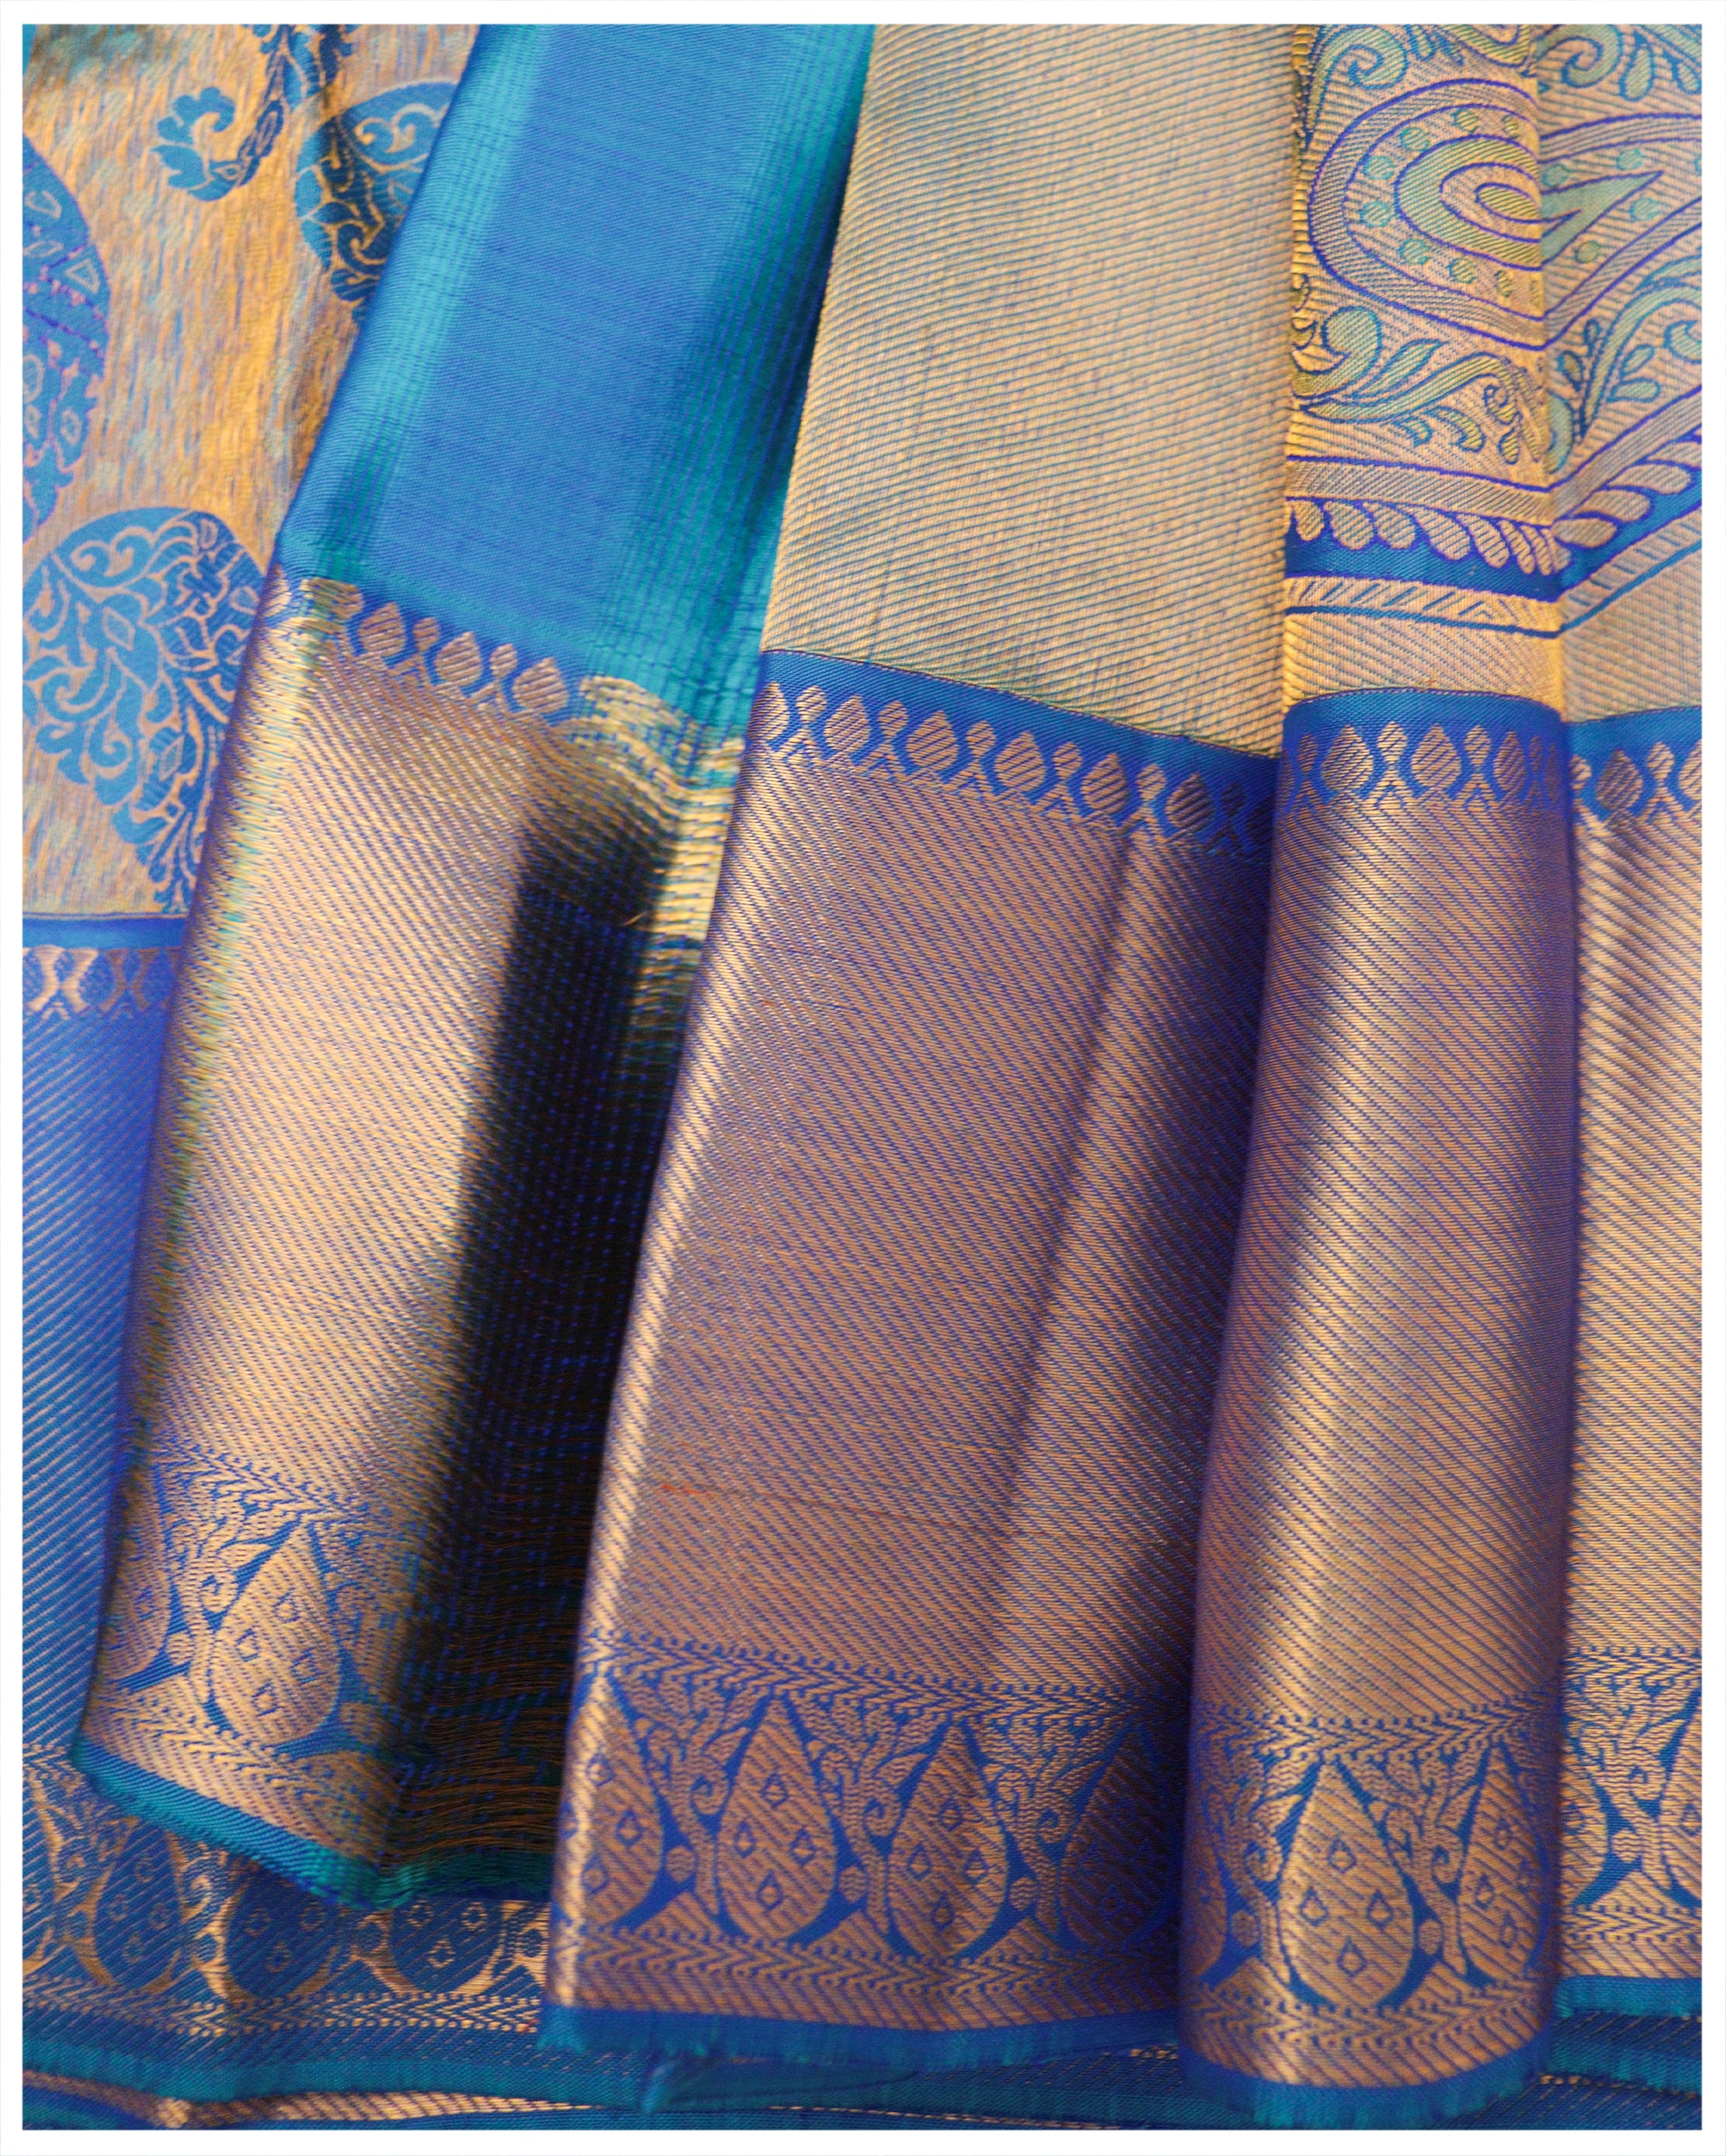 Kanjivaram Silk Saree in Peacock Blue with Zari Motifs & wide border in  Copeer | SILK MARK CERTIFIED | Contrasting colors, Silk sarees, Copper color